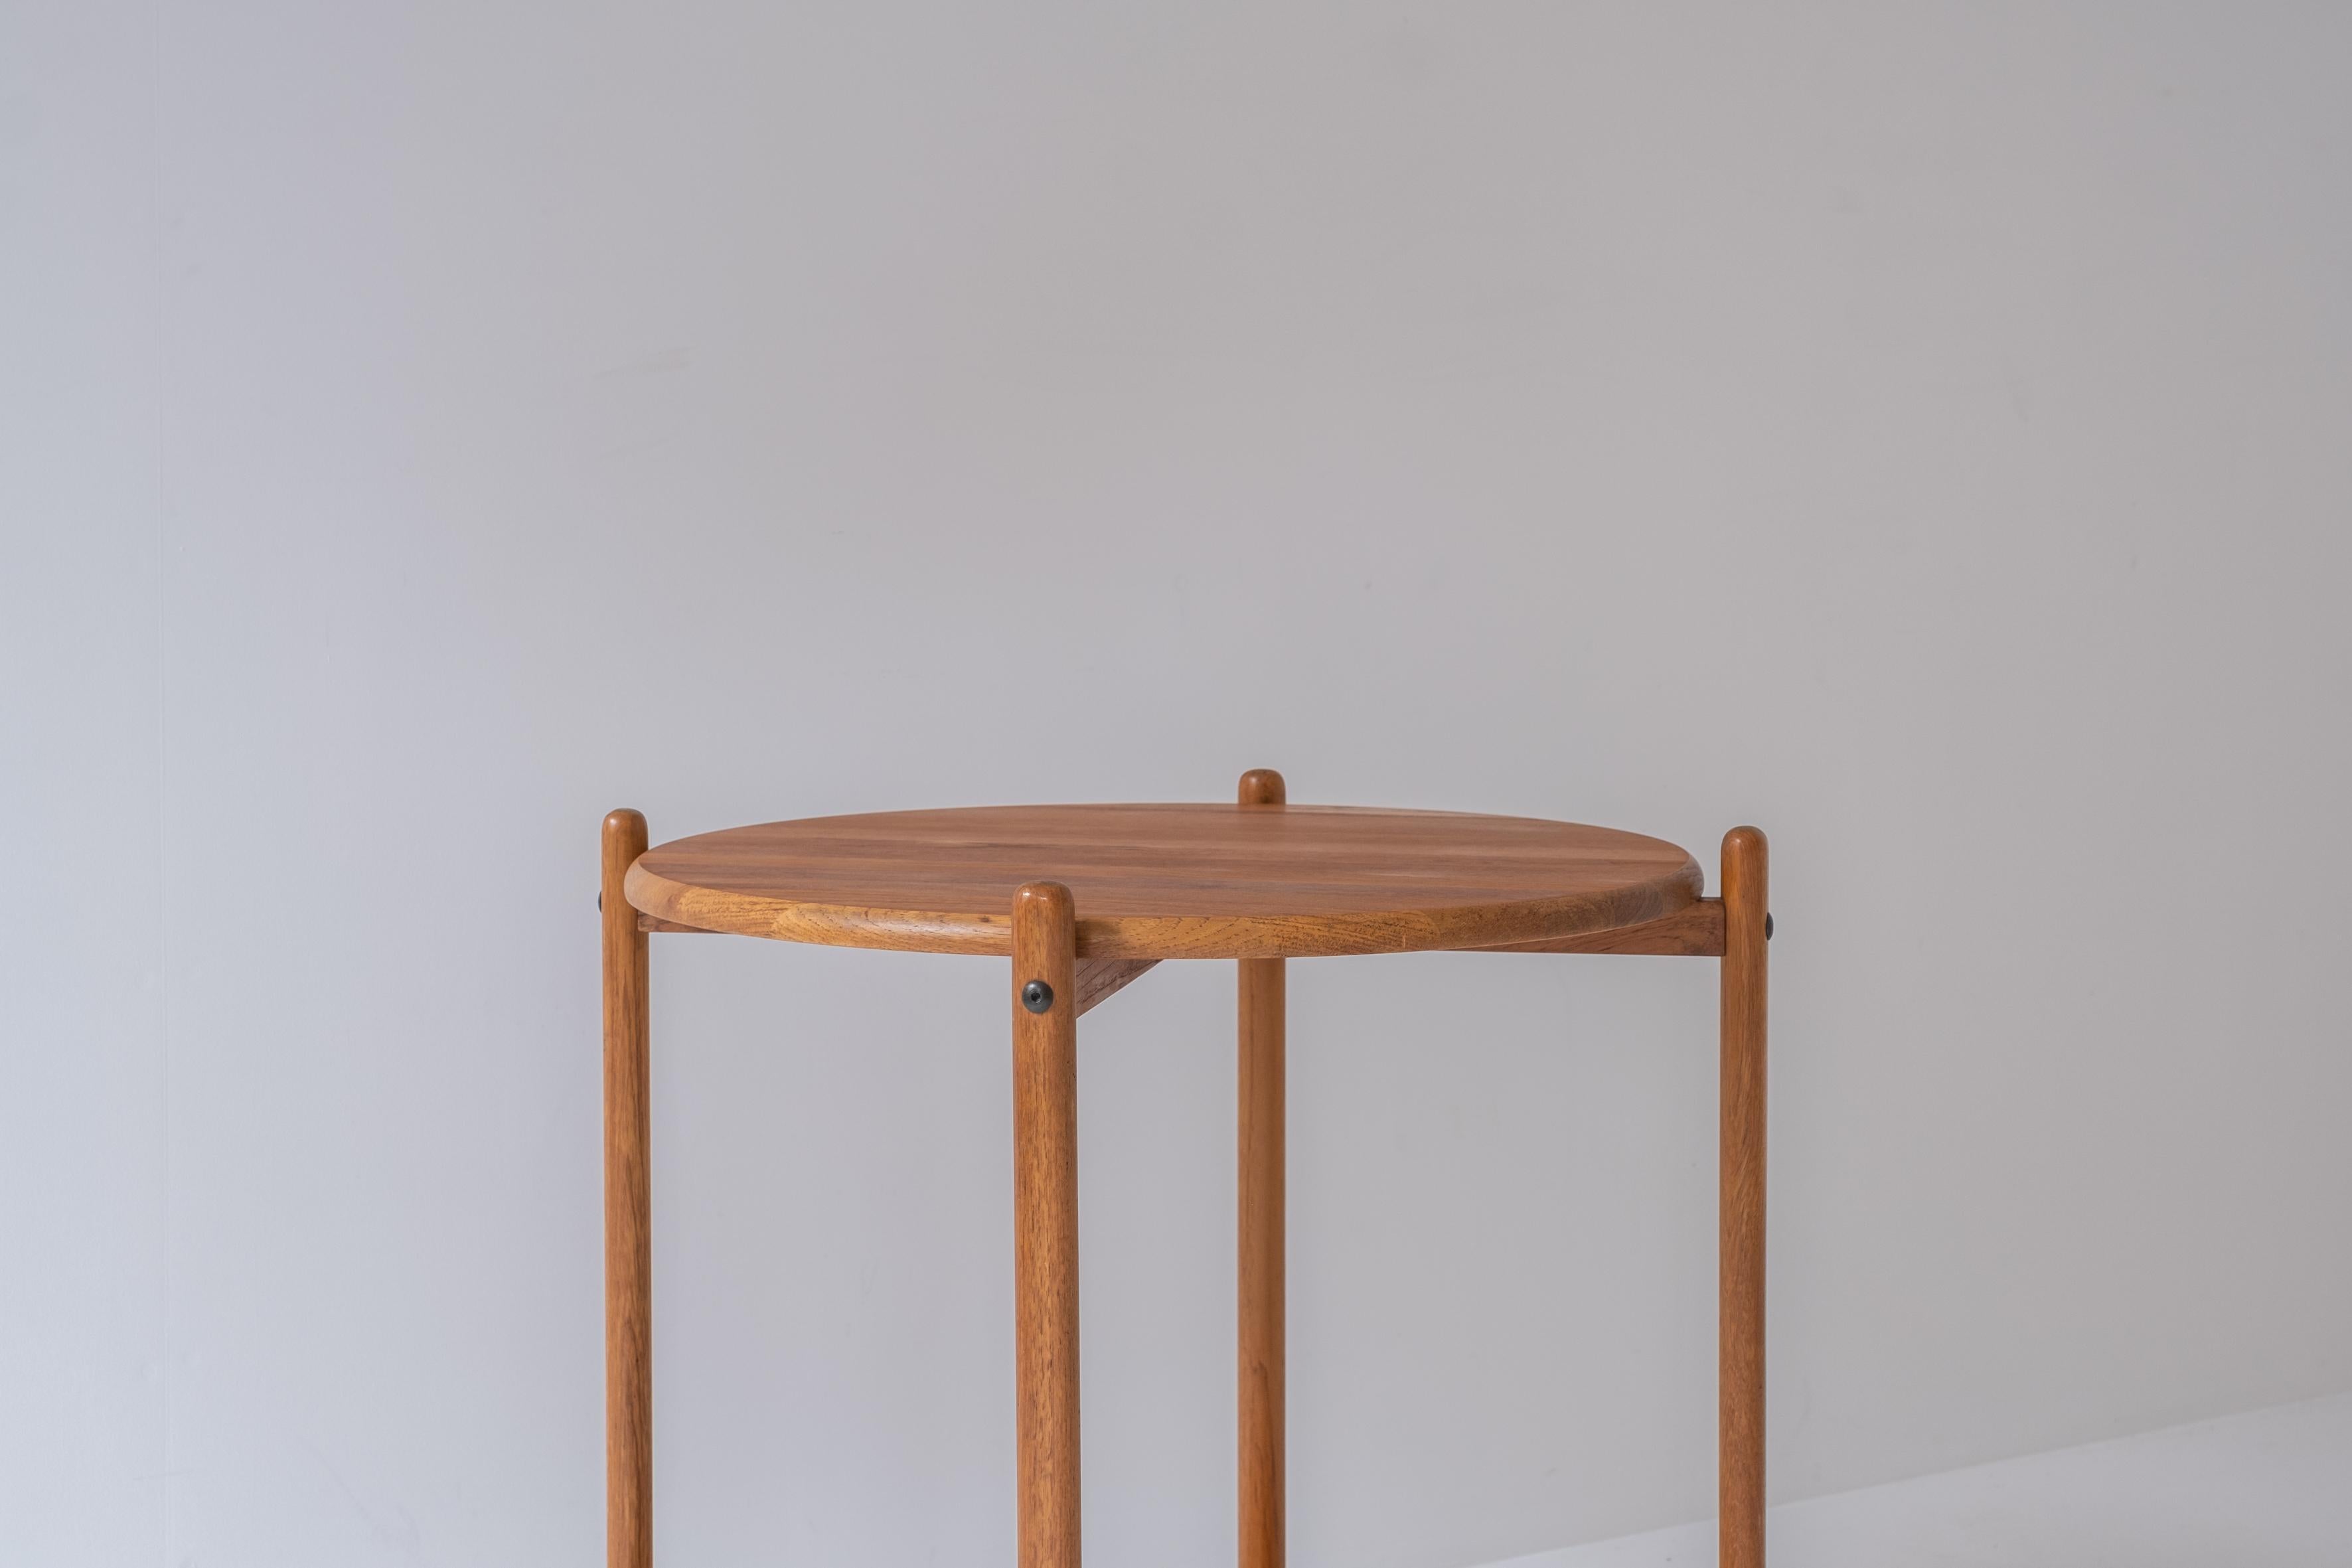 Danish Oak Tray Table from Denmark, Designed in the 1960s